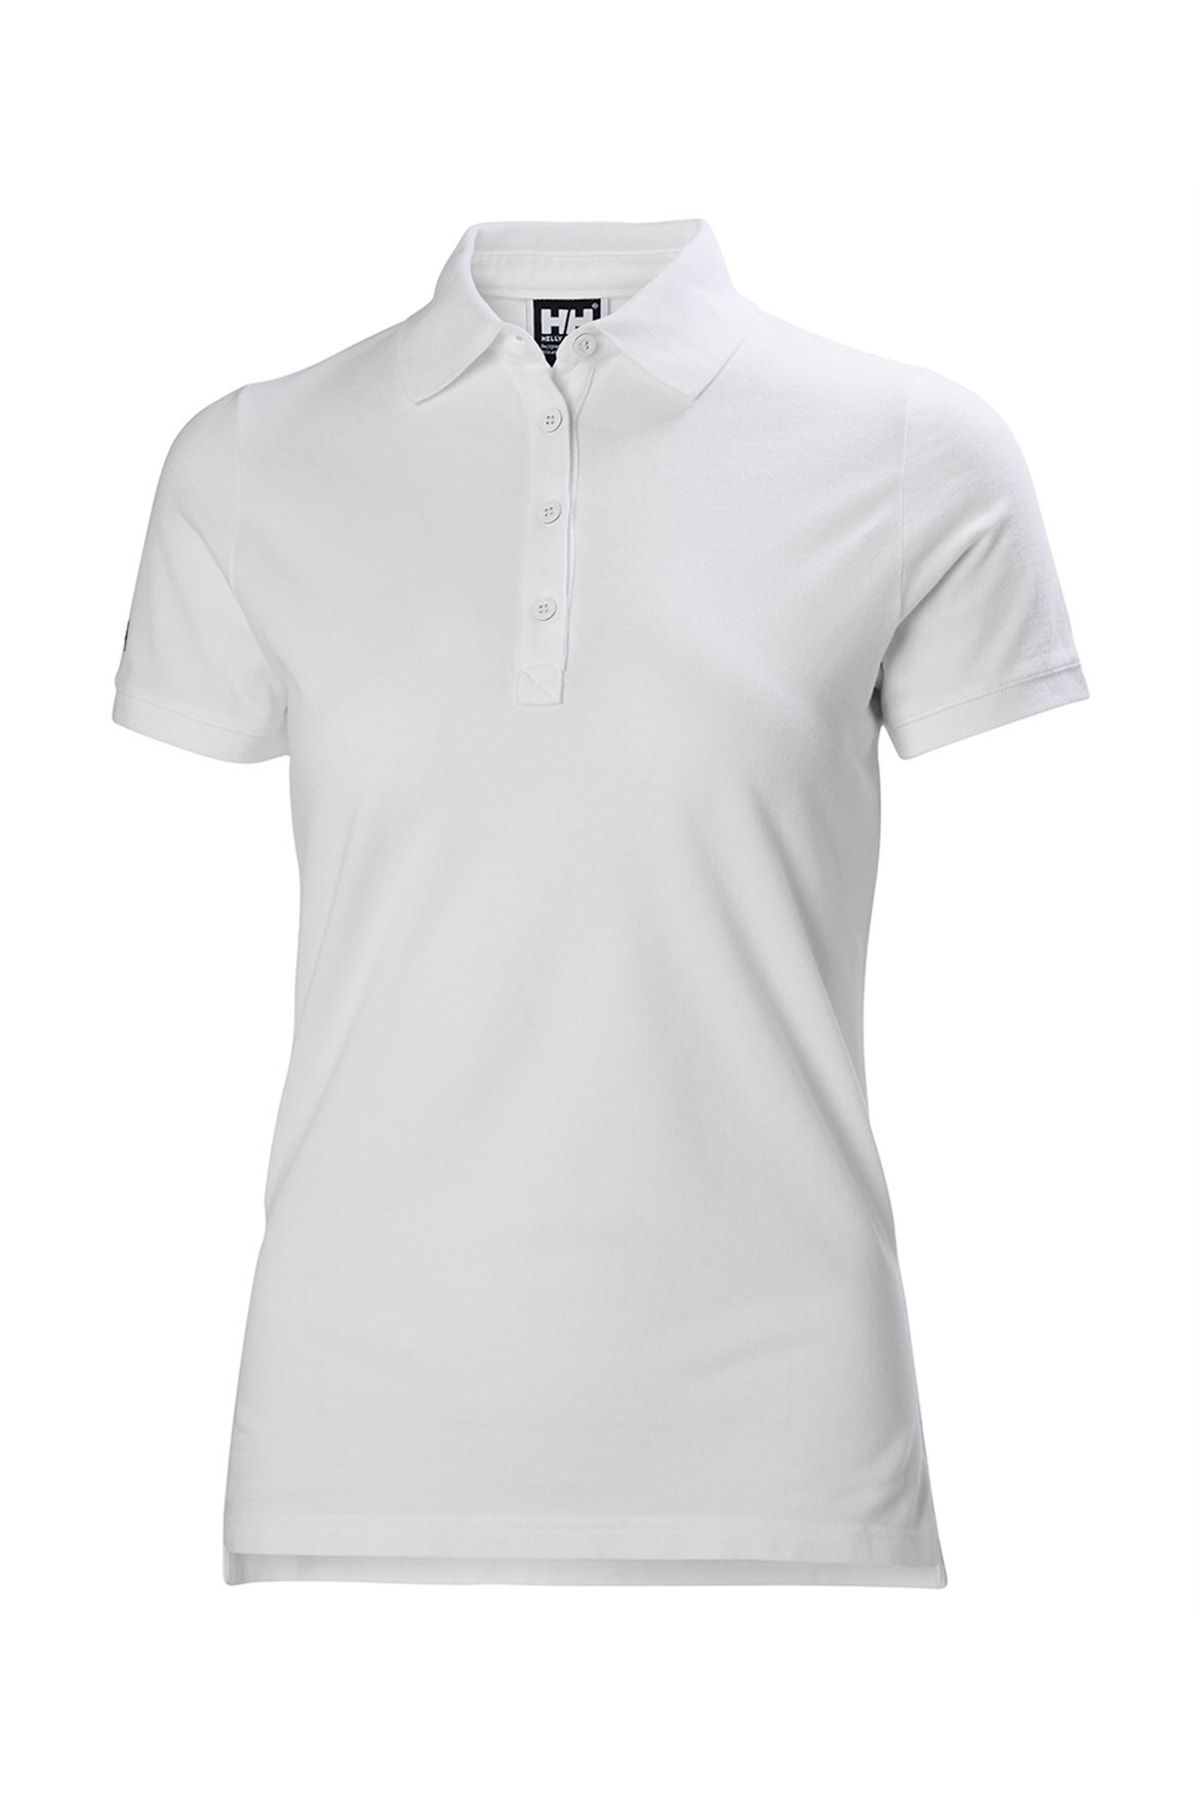 Helly Hansen Kadın Beyaz Polo Yaka Tshirt